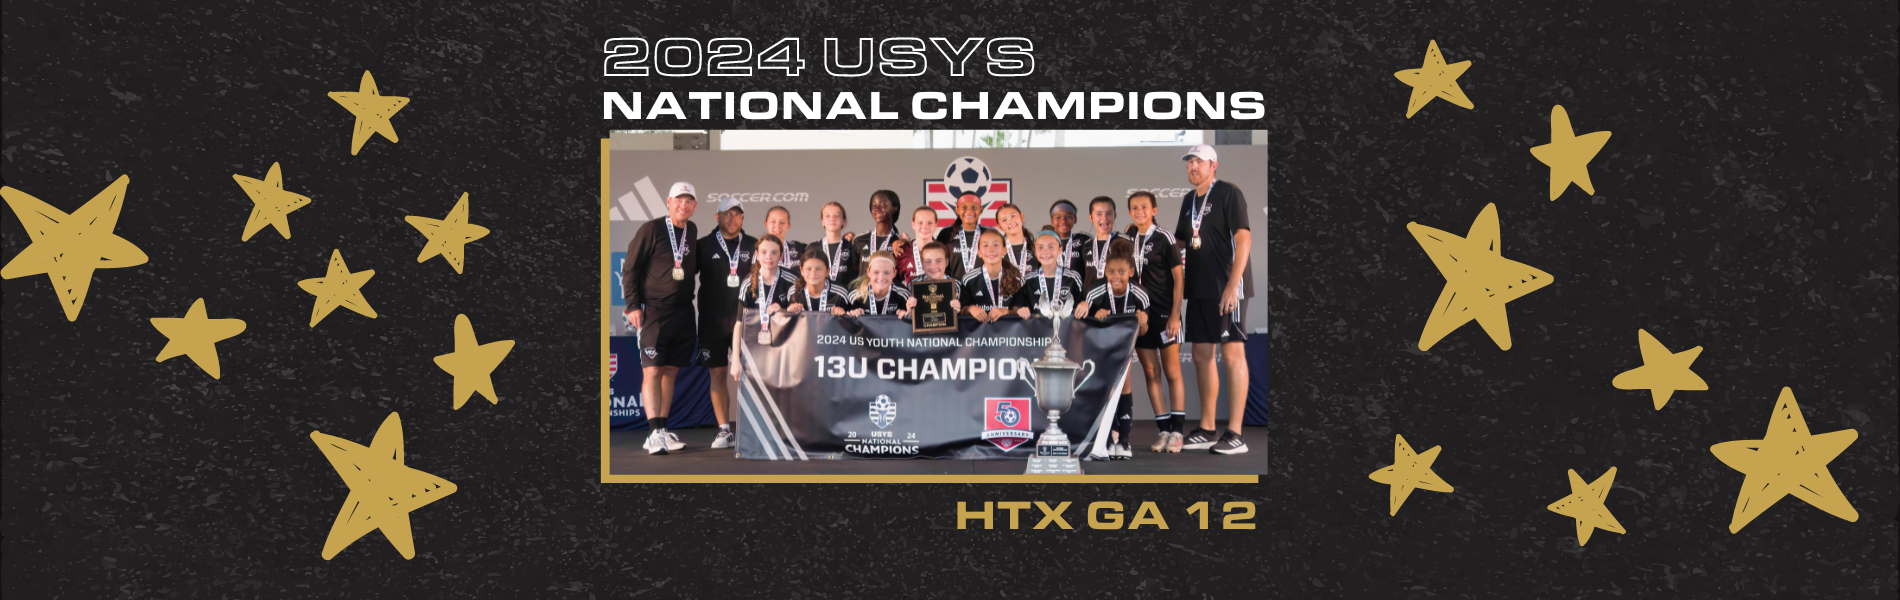 HTX Soccer GA 12 National Champions